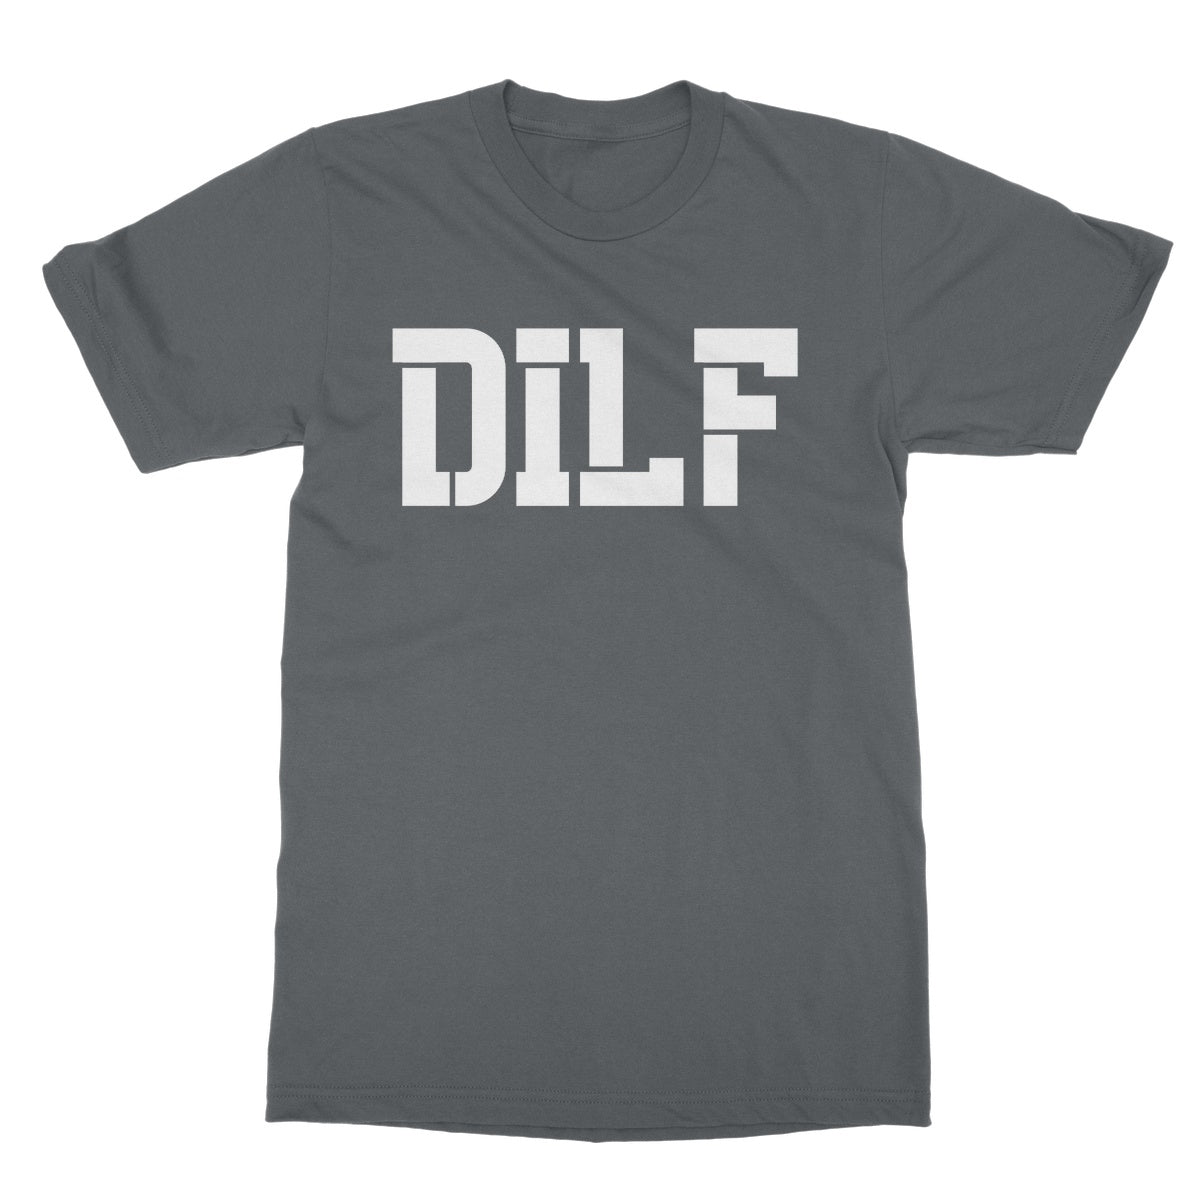 dilf t shirt grey